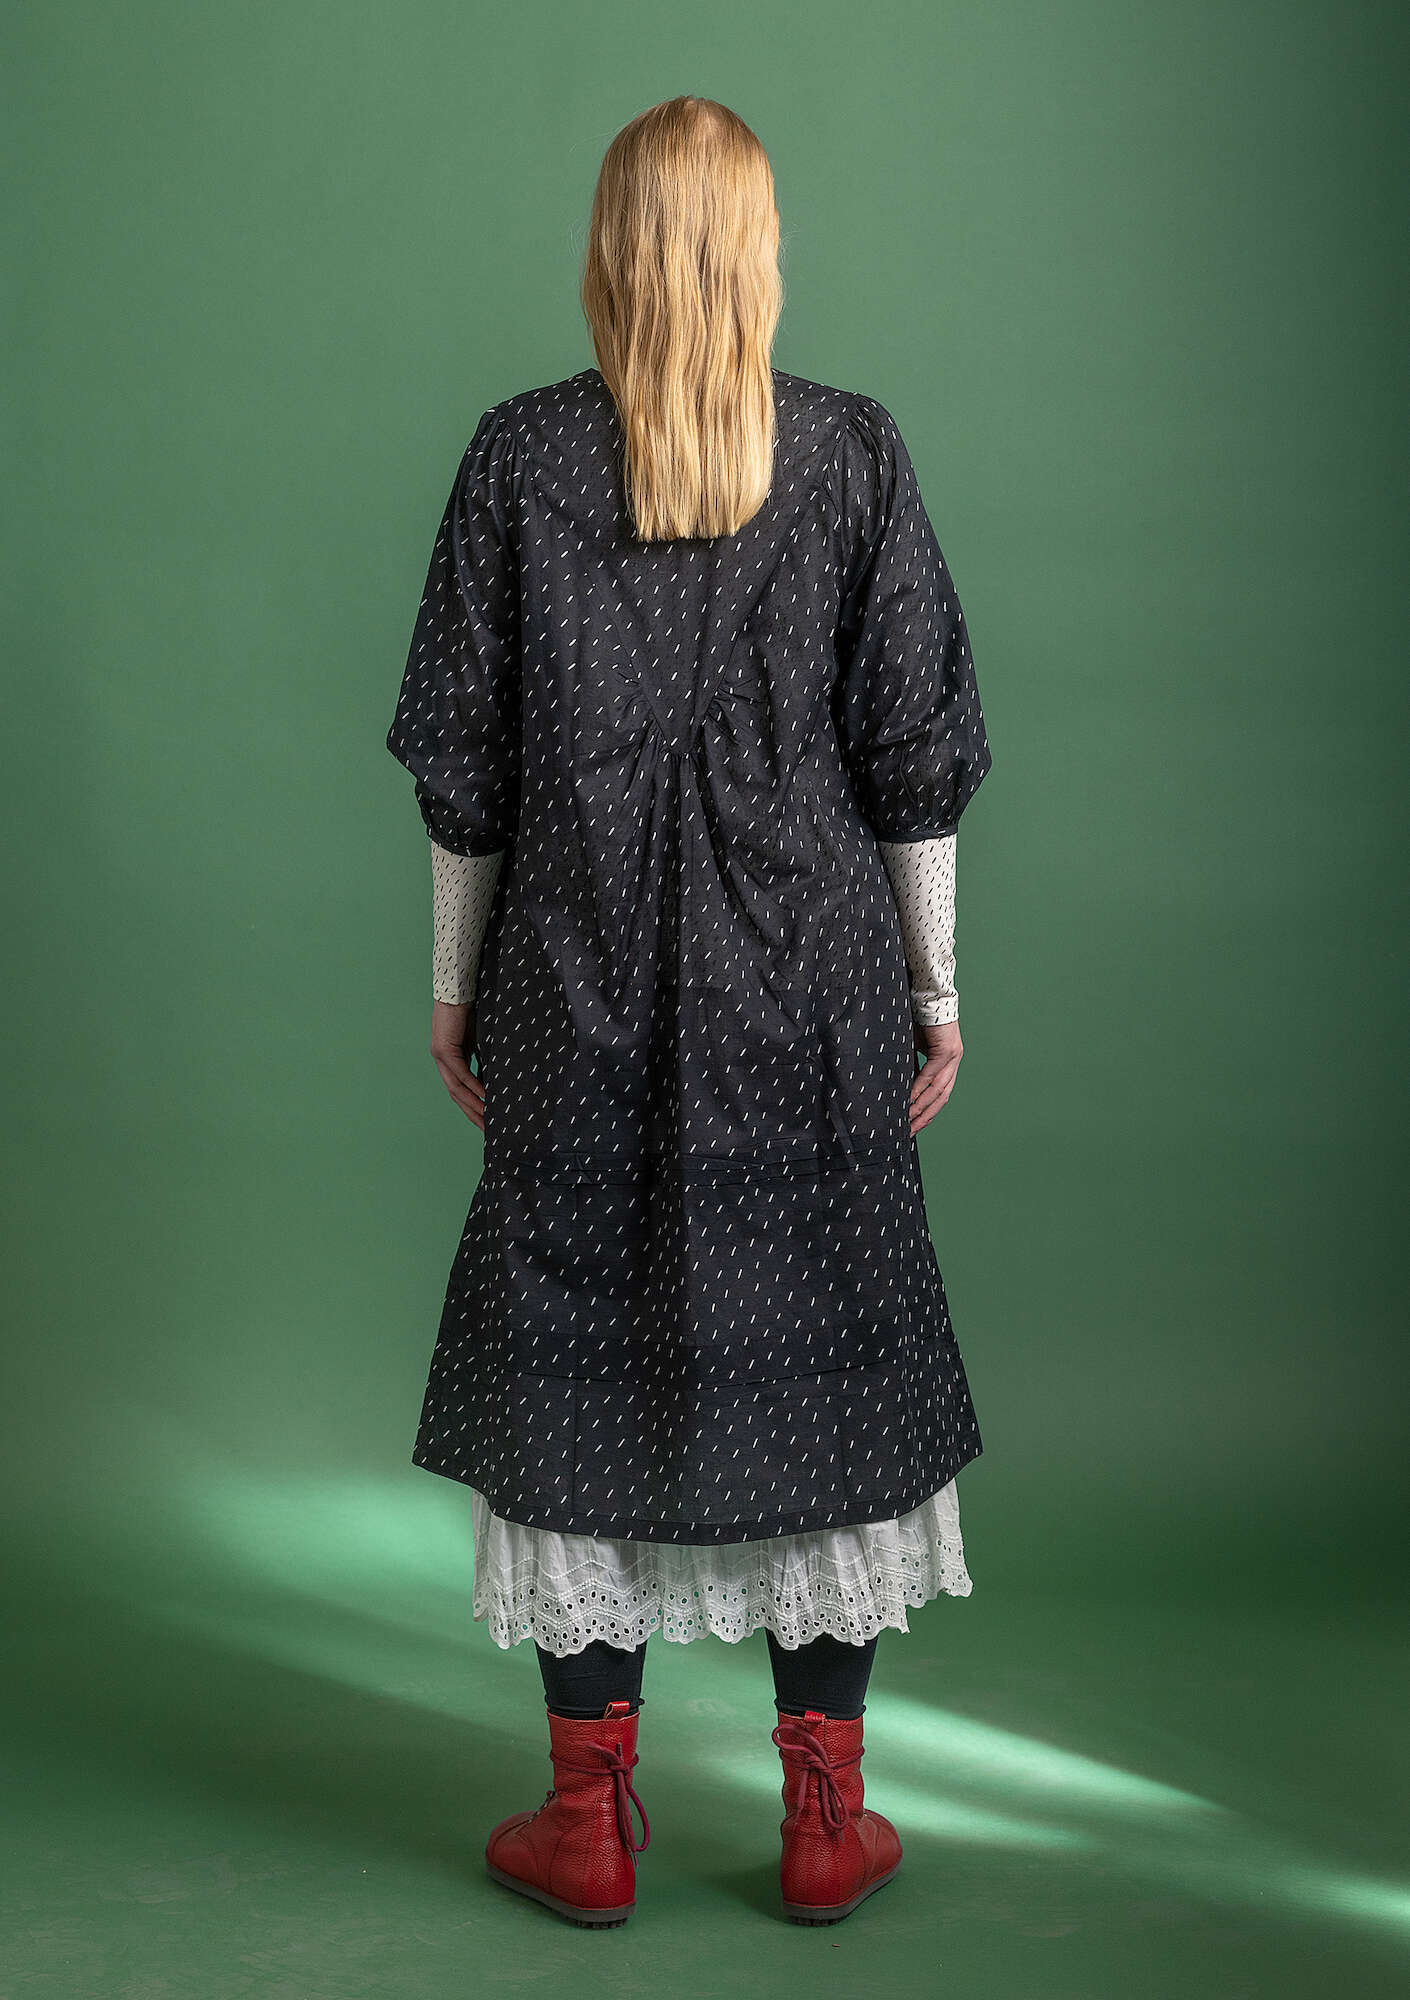 Vævet kjole  Blossom  i økologisk bomuld sort/mønstret